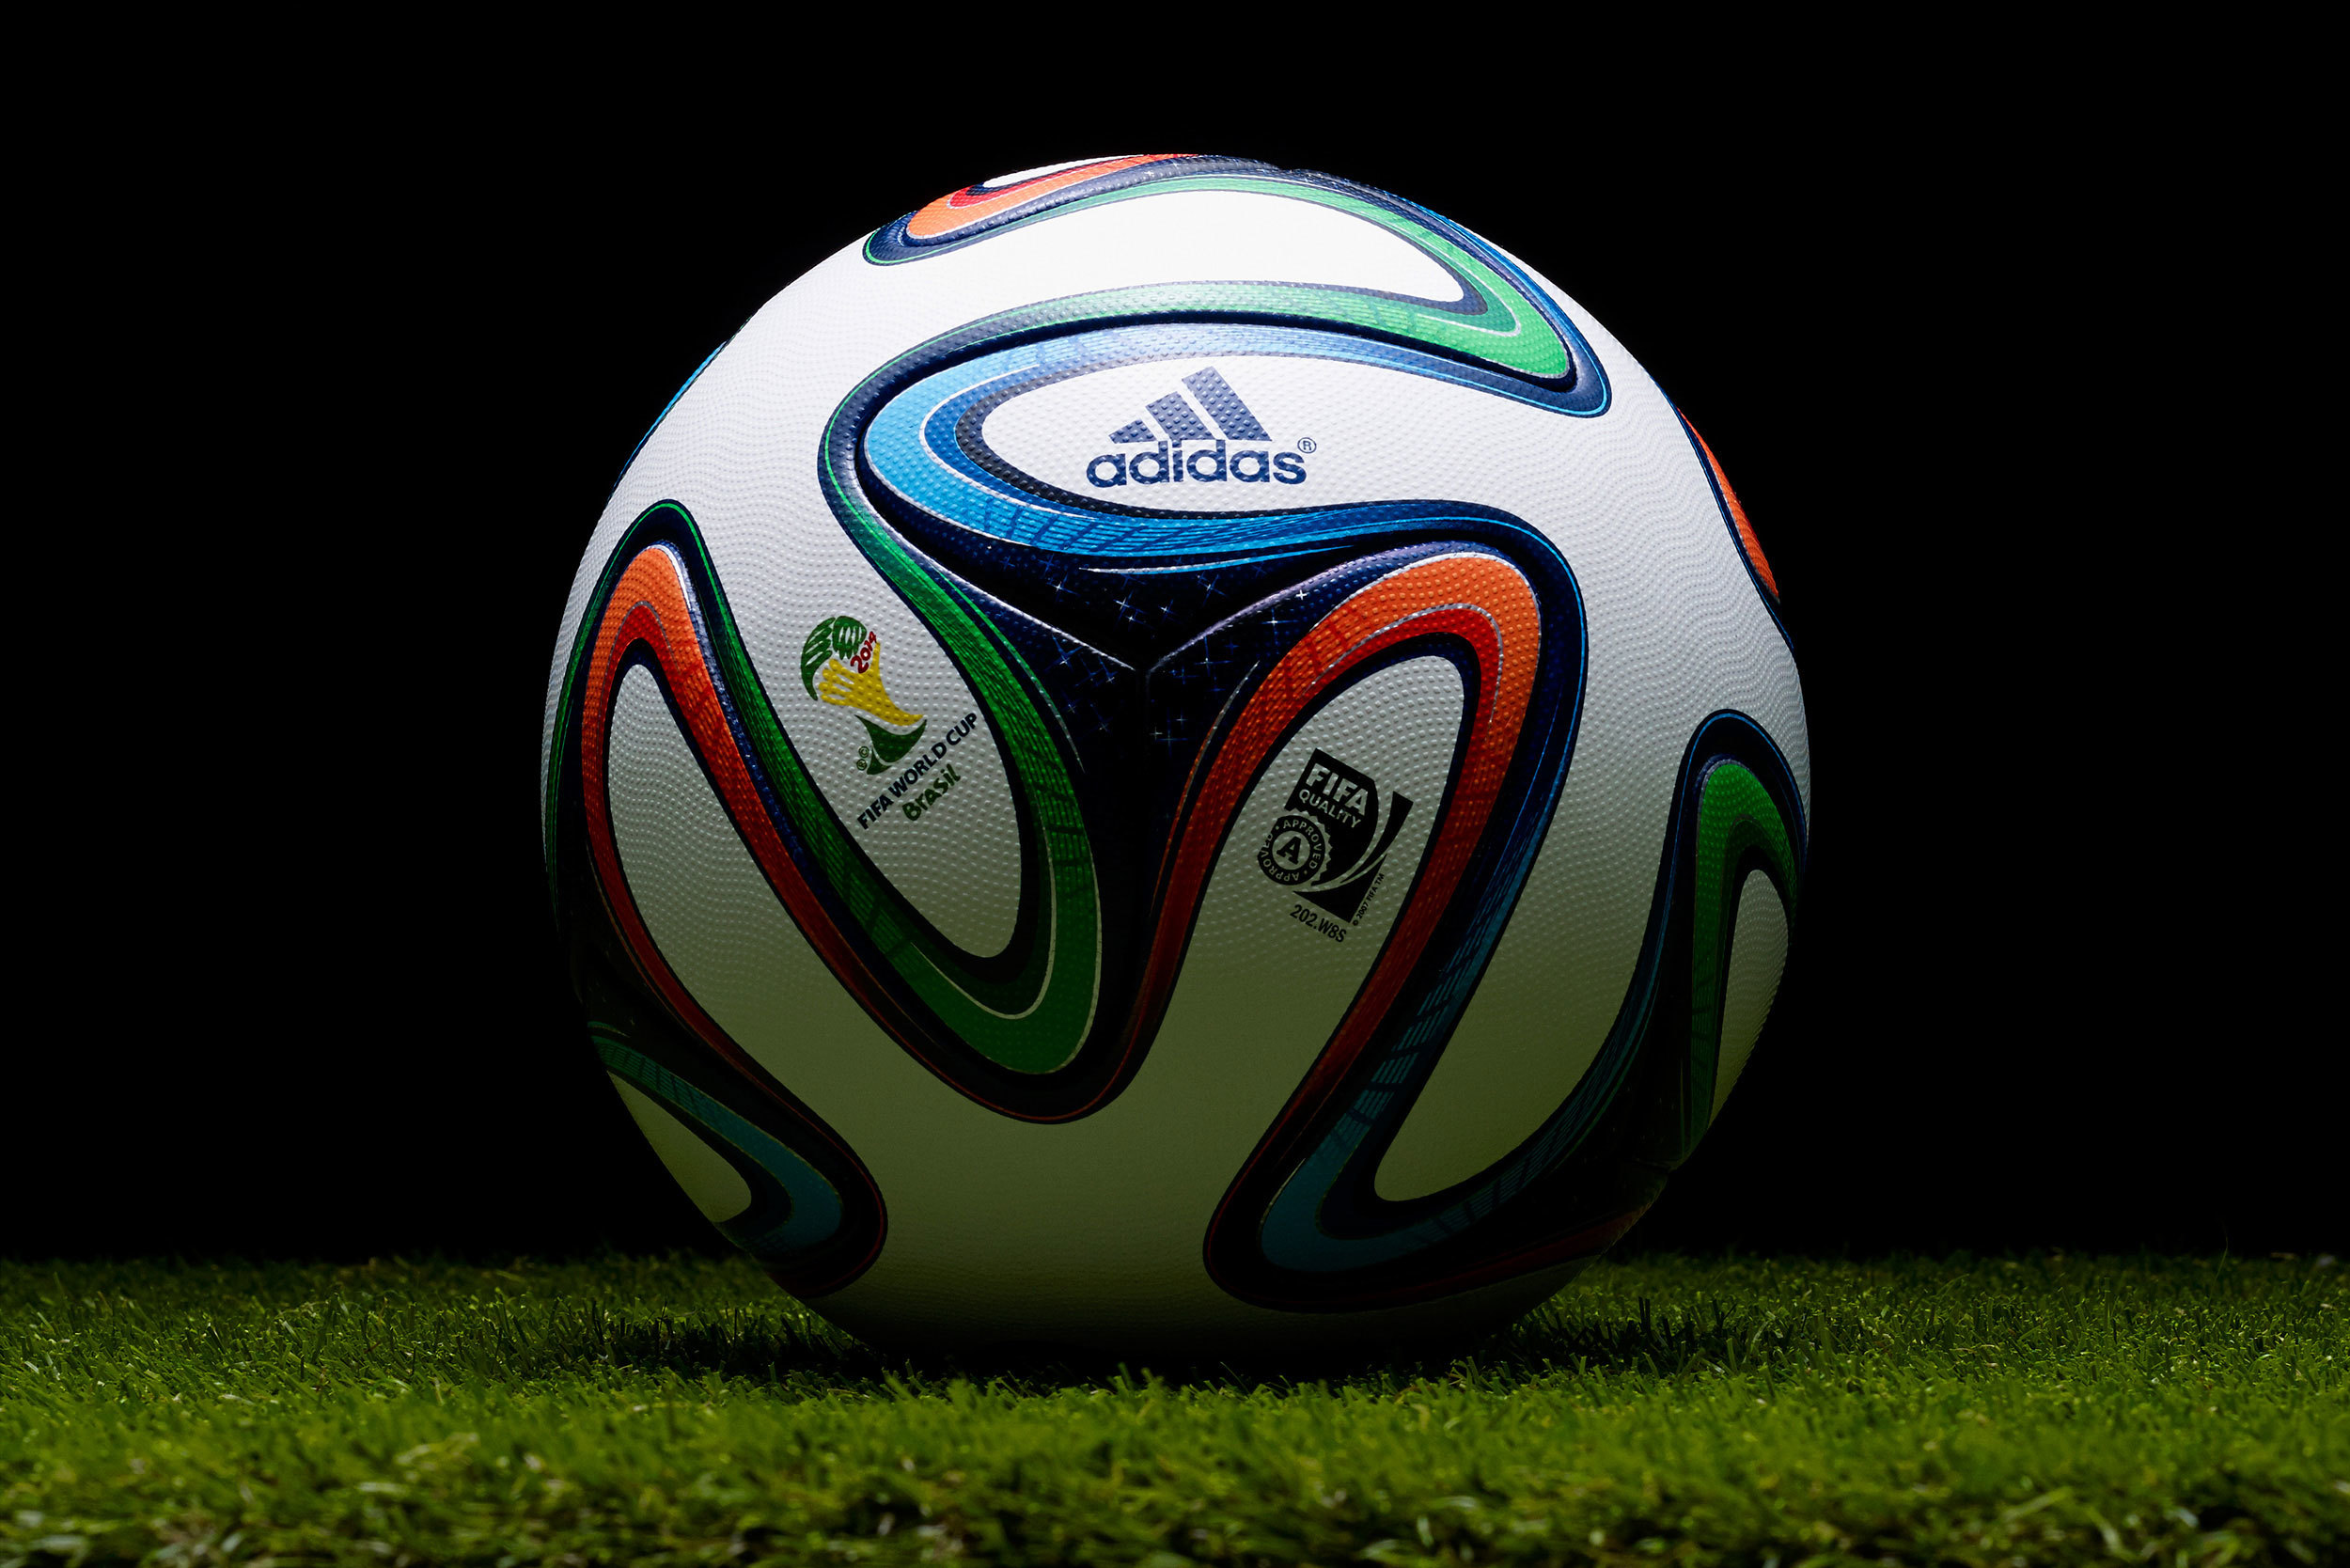 ball, football, sports, adidas, 2014, world cup, brazuca